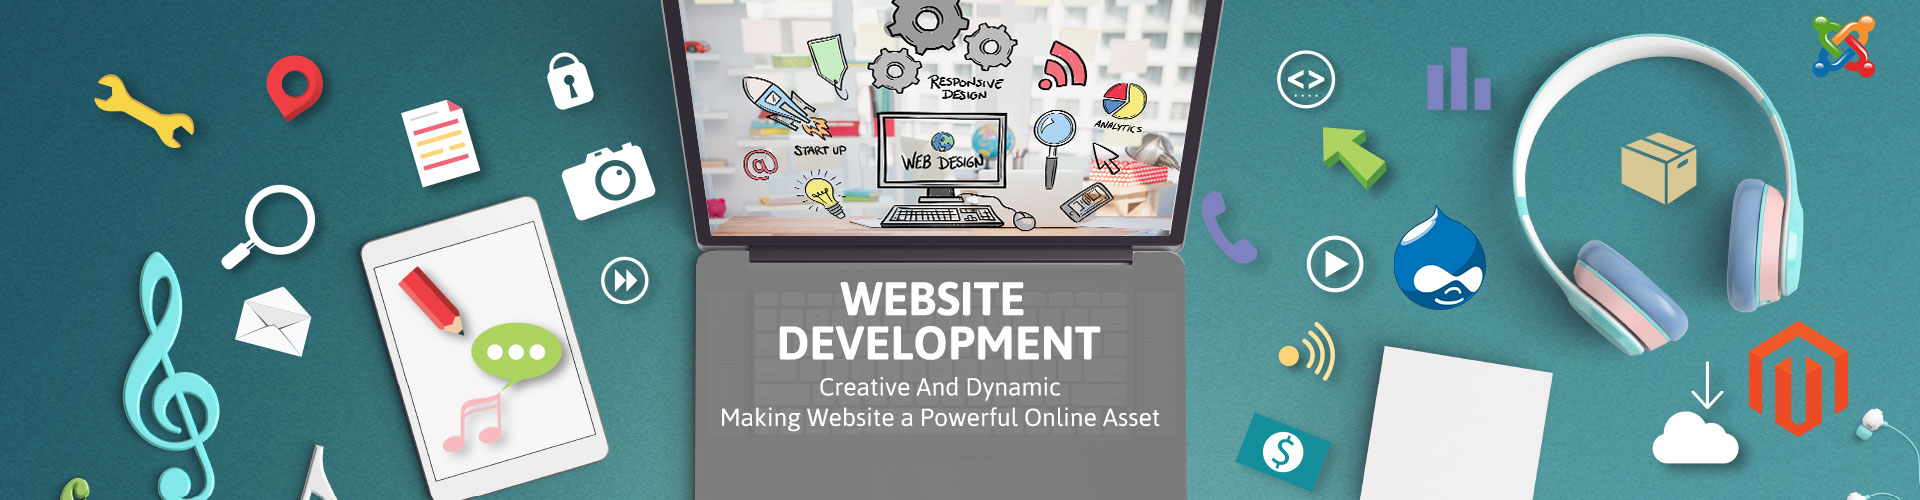 Website Design Banner